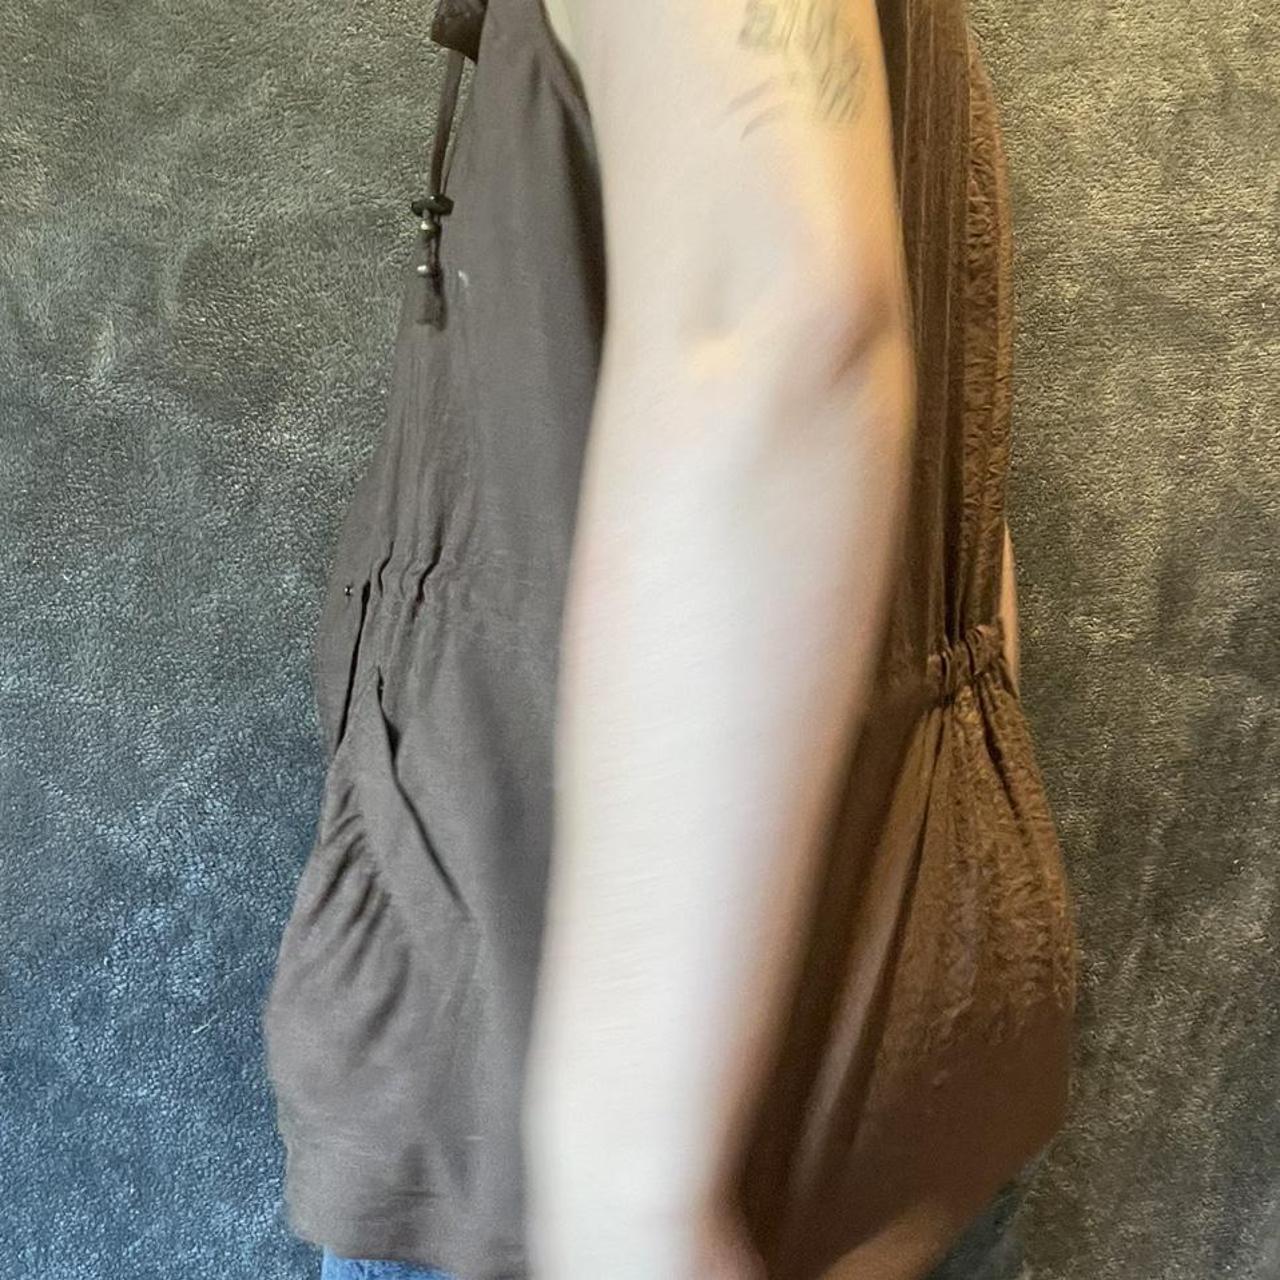 Product Image 3 - Women’s Vintage Oversized Brown Vest

Worn